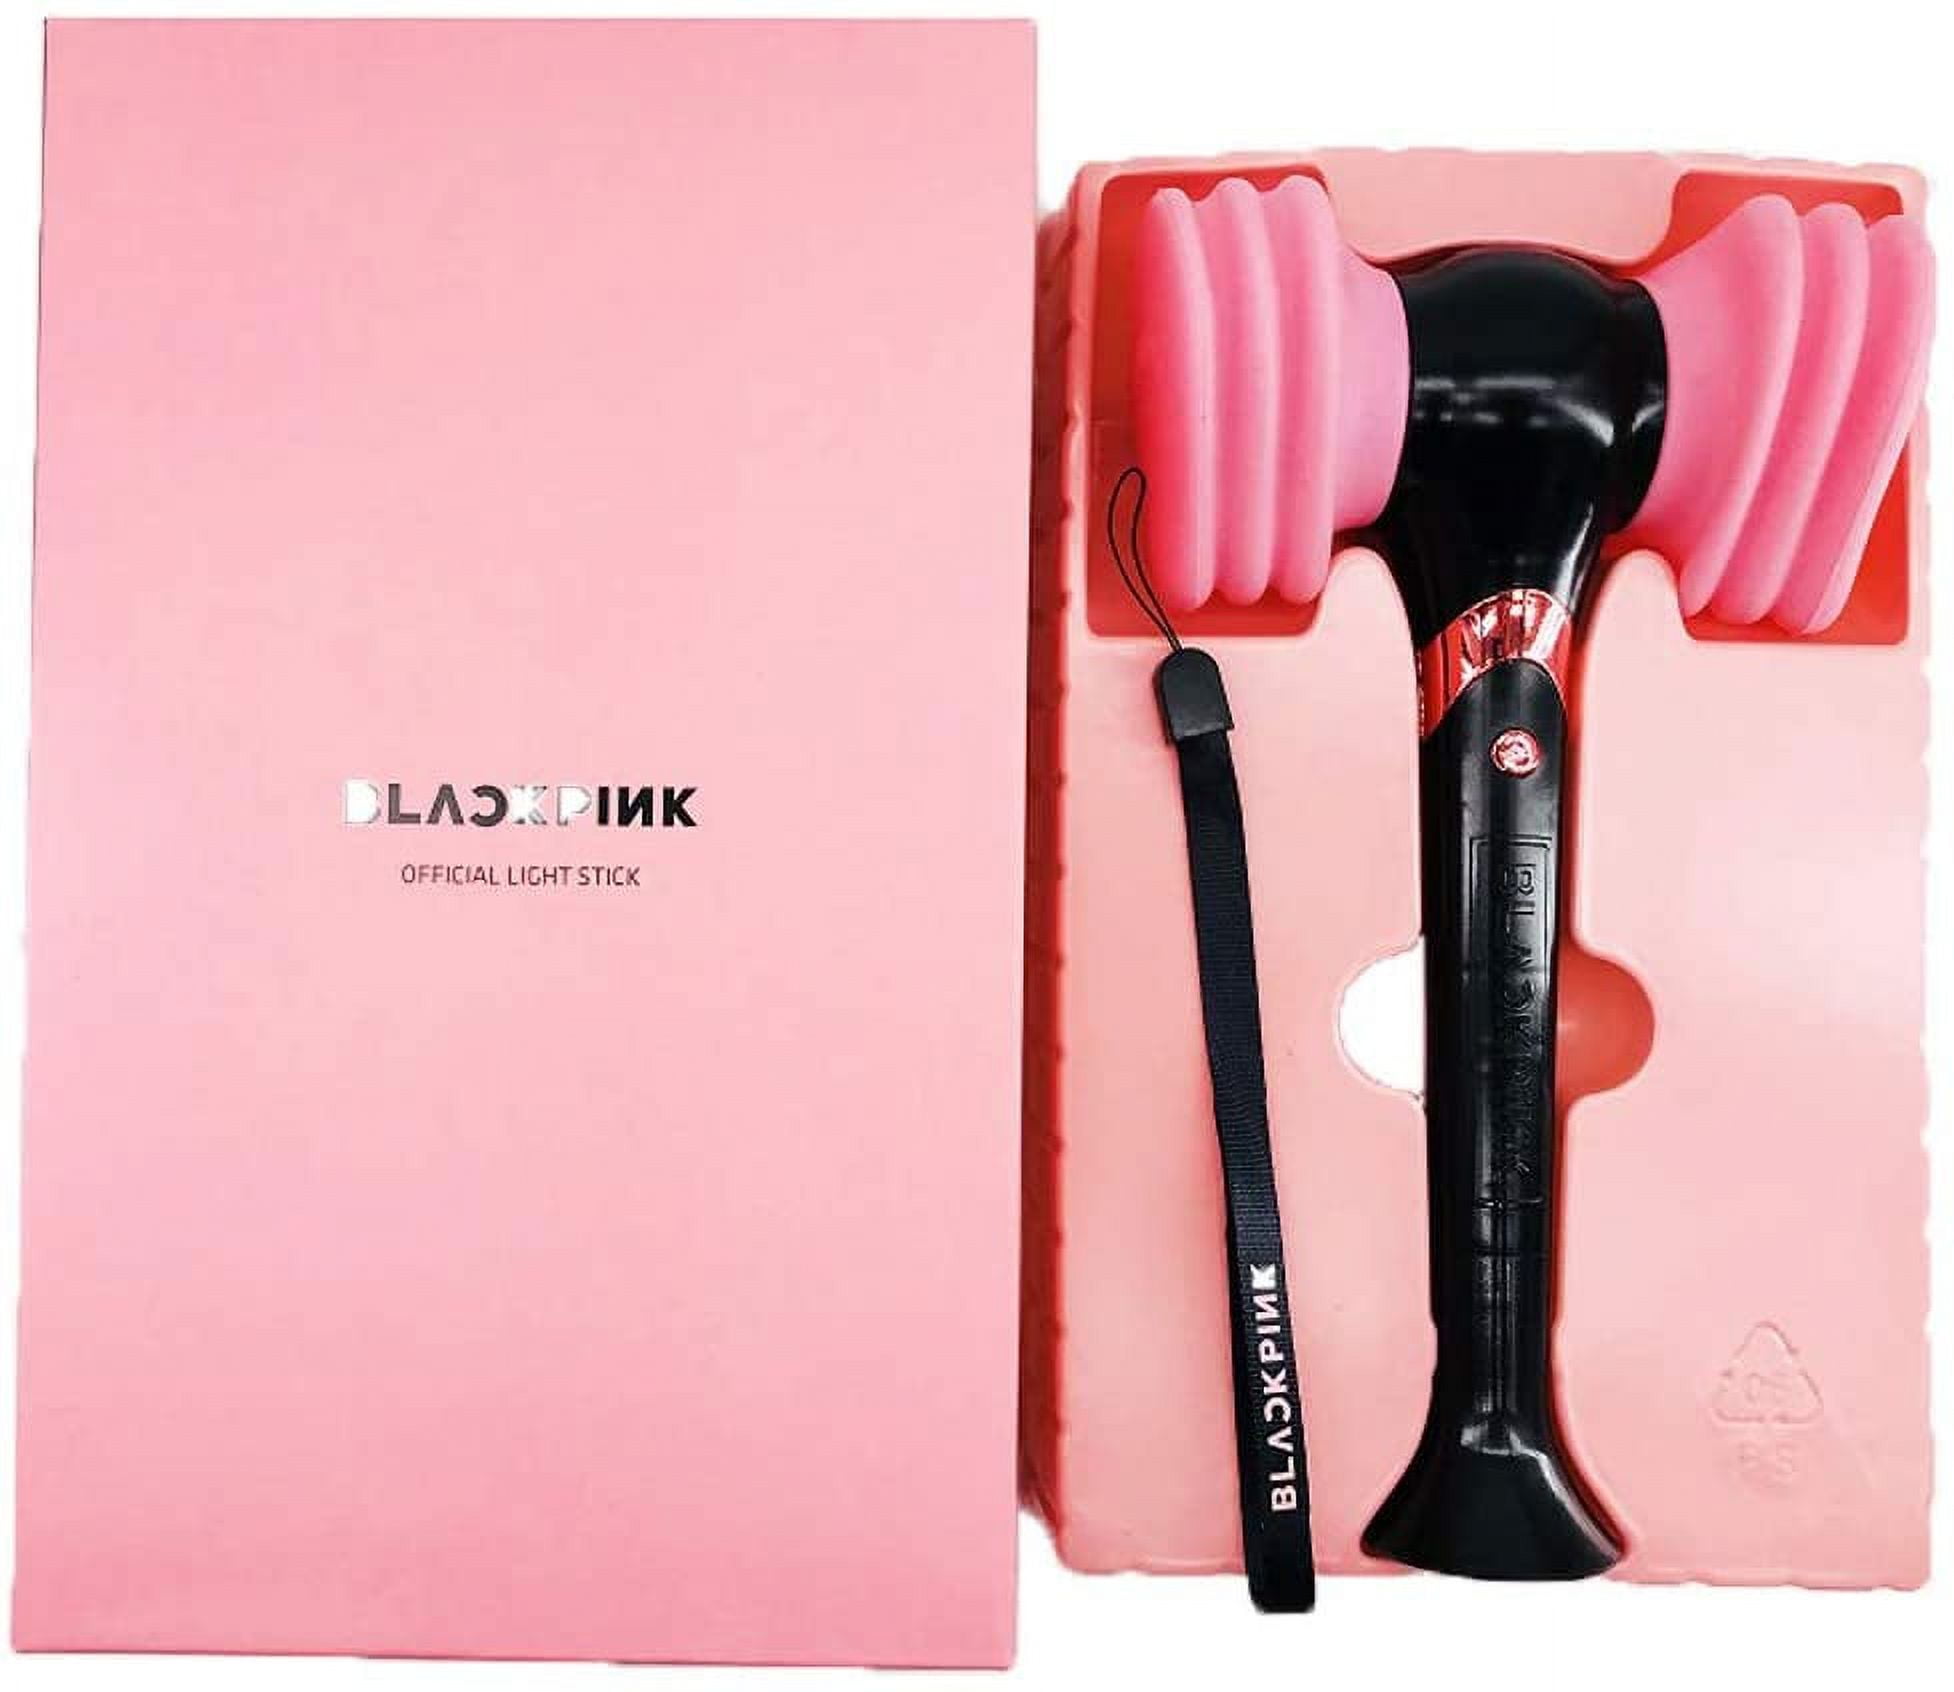 LIGHT SITCK] BLACKPINK OFFICIAL LIGHT STICK VER.2/ RENEWAL EDITION – K Pop  Pink Store [Website]